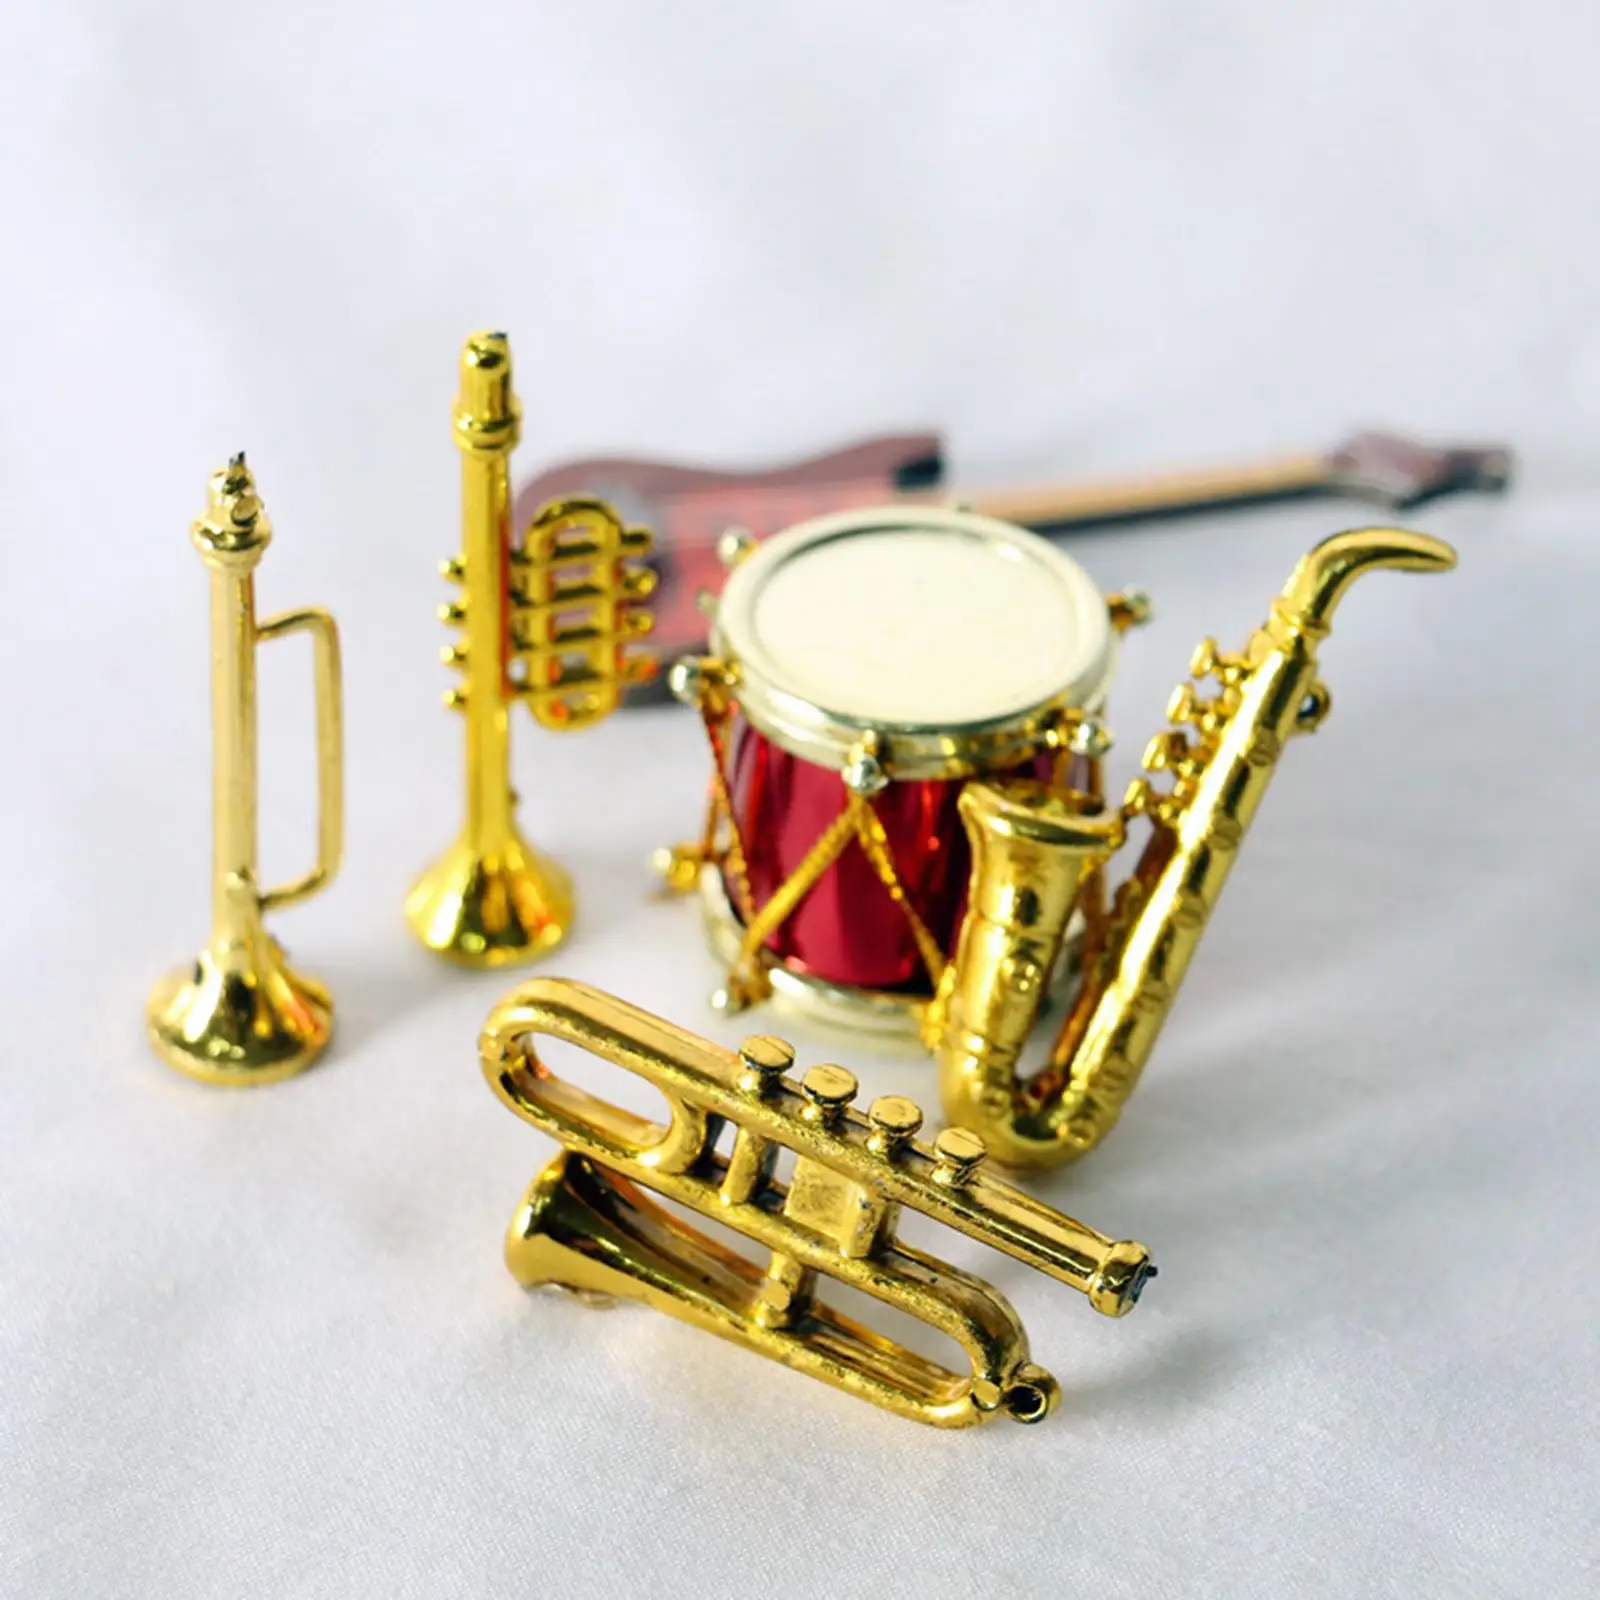 Dollhouse Miniature Musical Instrument Miniature Saxophone for Children